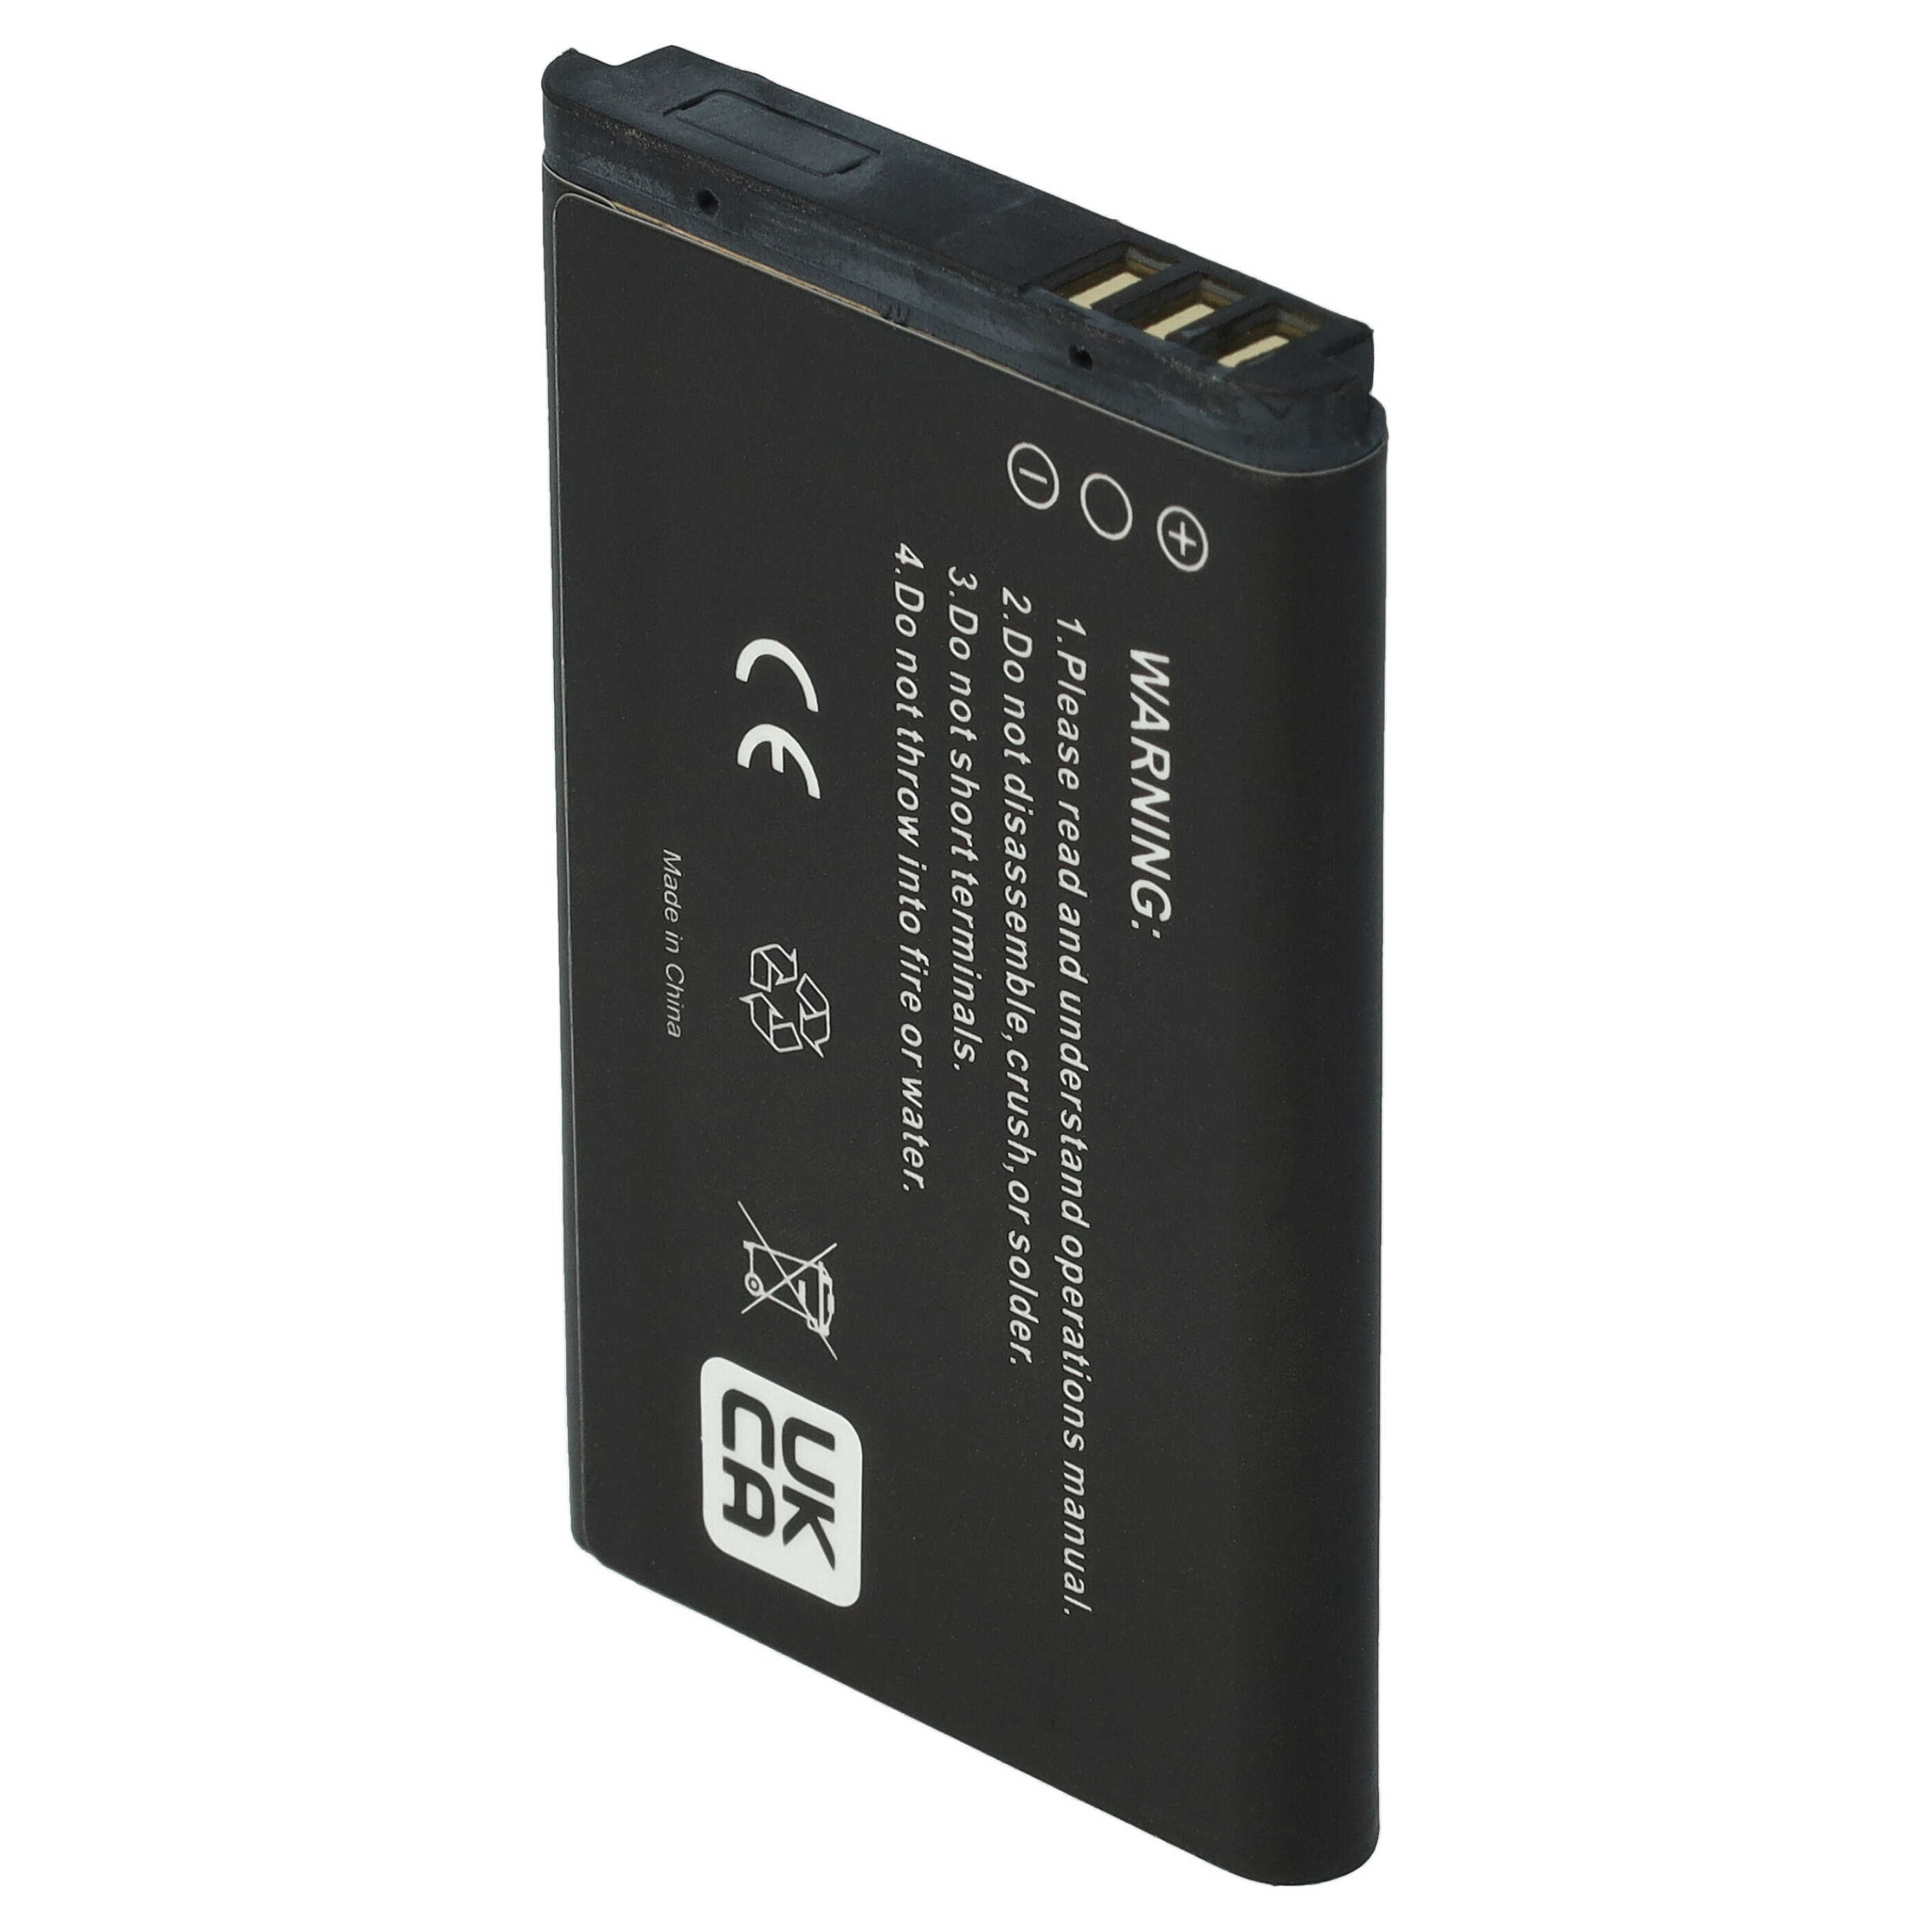 Bluetooth GPS Receiver Battery Replacement for HX-N3650A, BA-01, HXE-W01 - 700mAh 3.7V Li-Ion